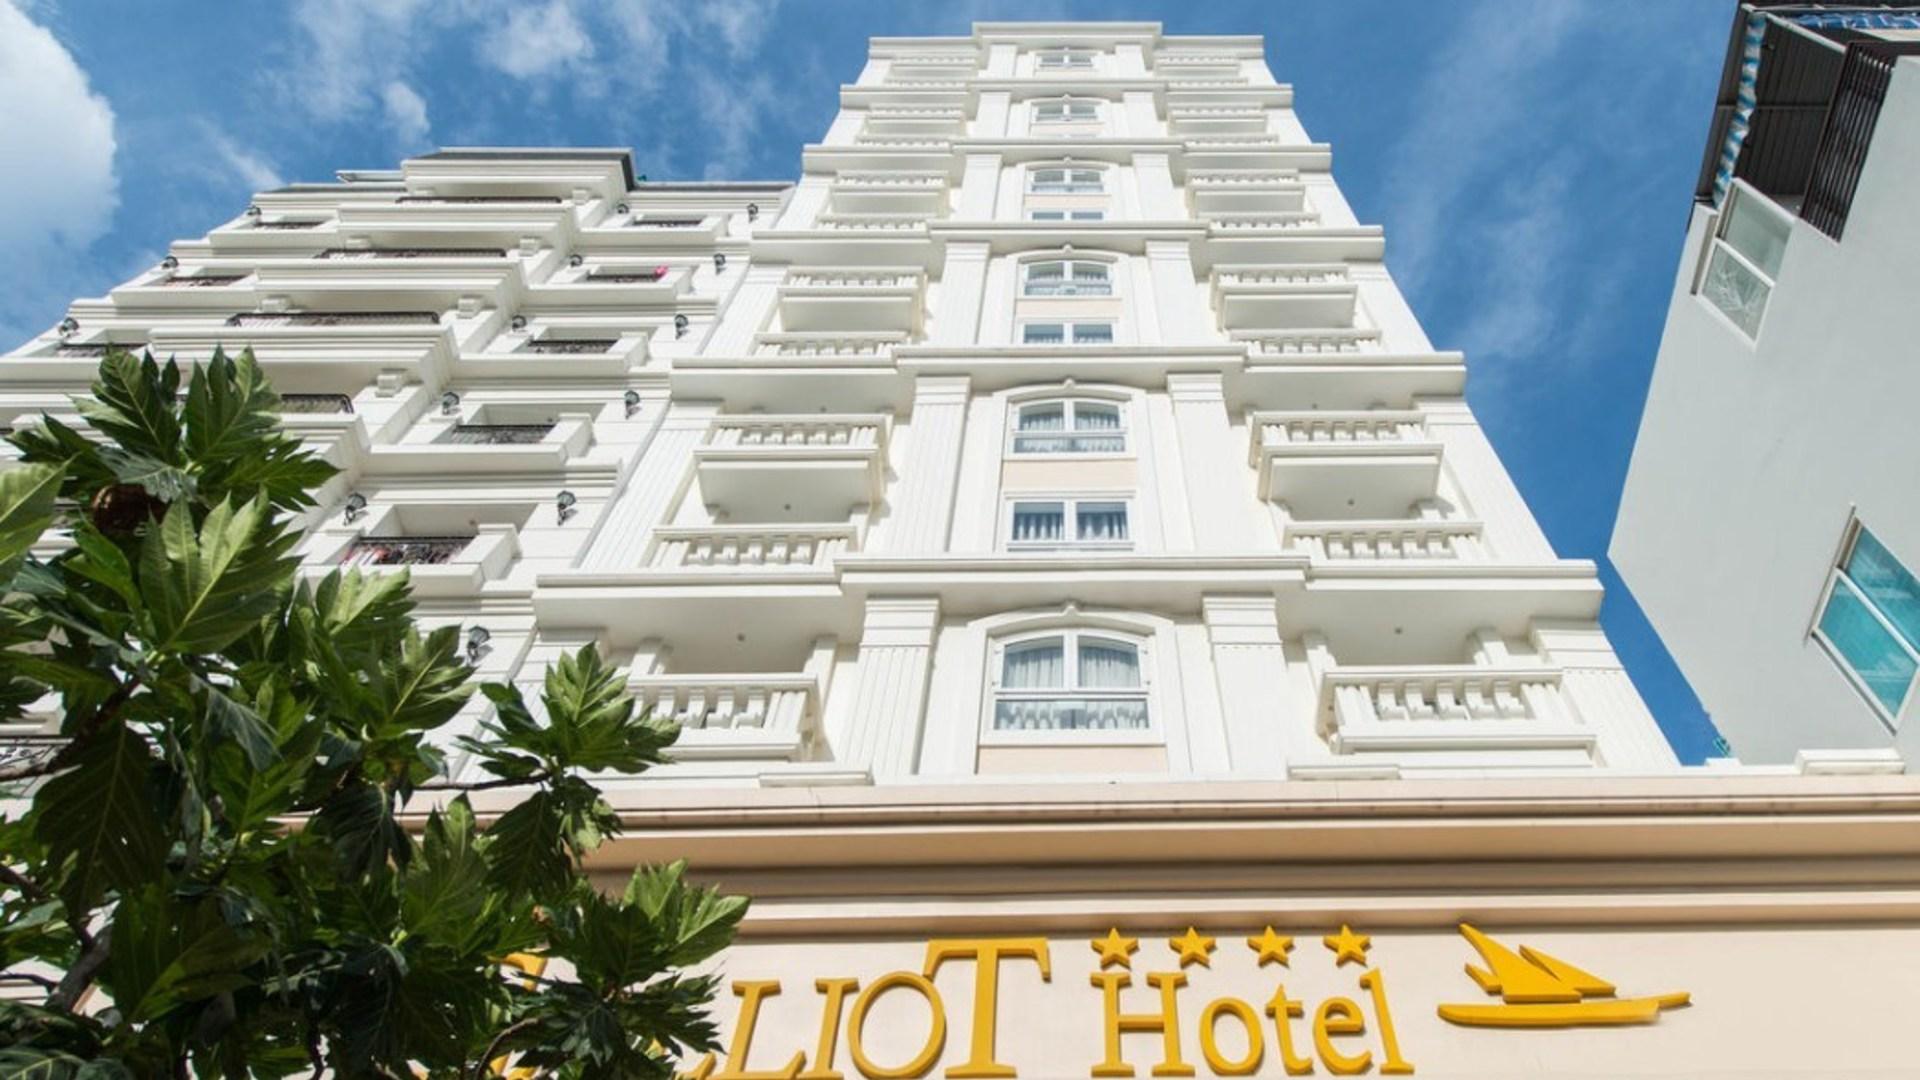 Galliot Hotel 4* (Галлиот отель) во Вьетнаме, Нячанг